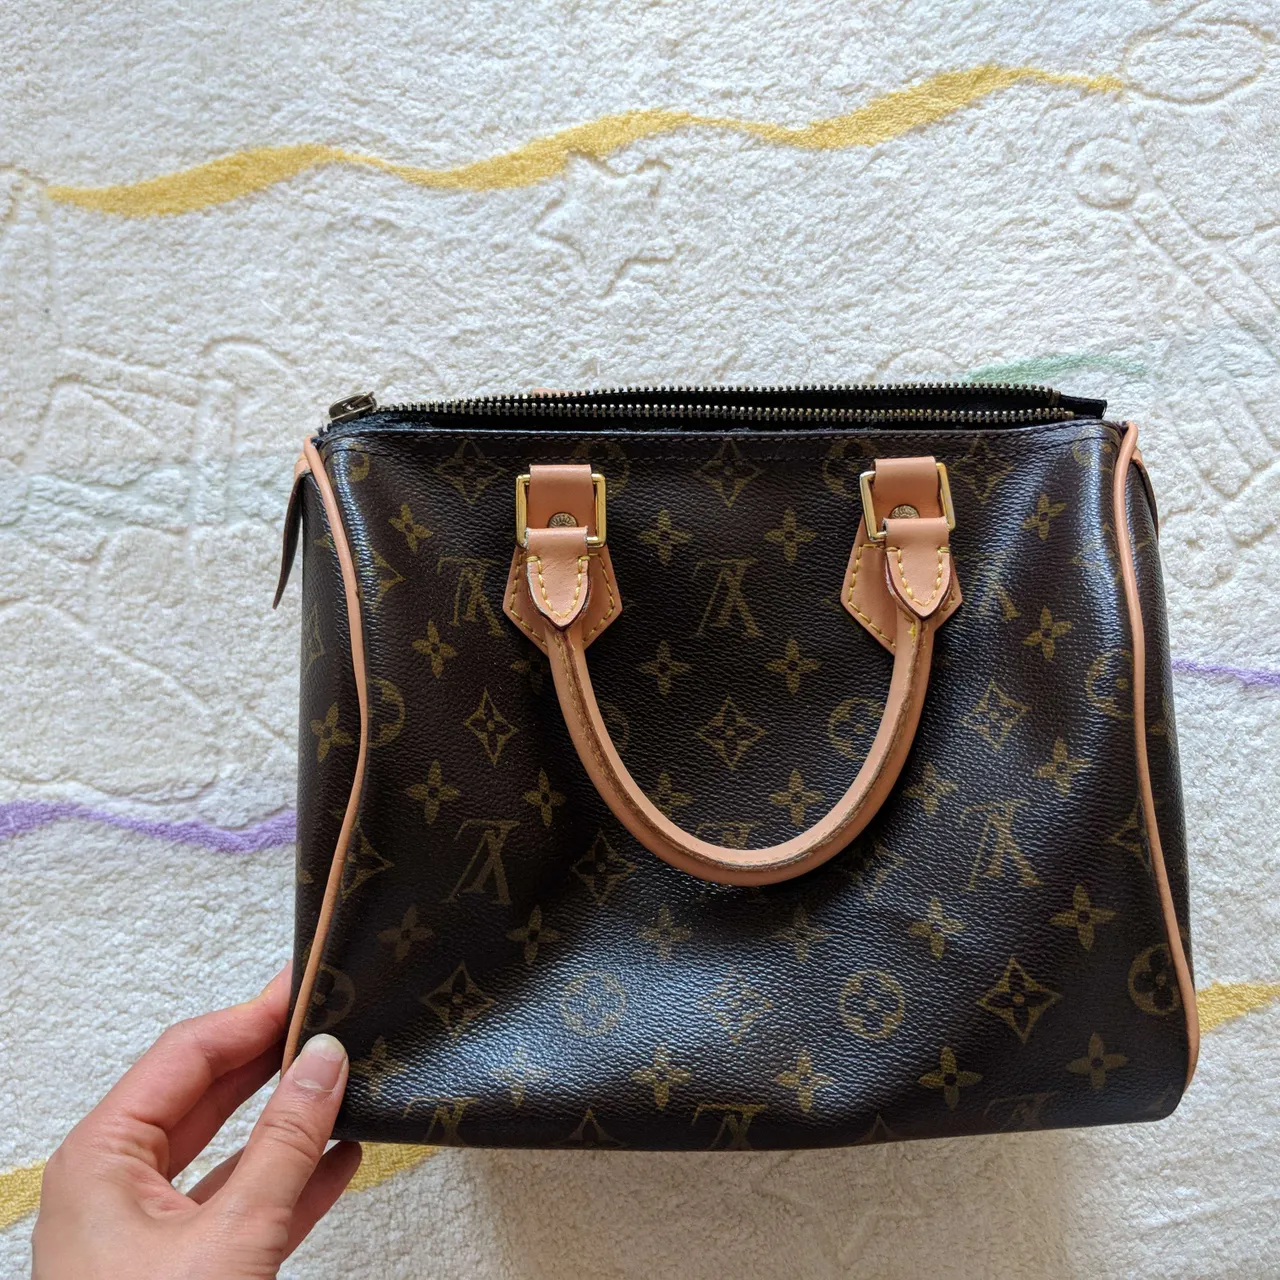 Imitation Louis Vuitton speedy bag in Brown photo 1